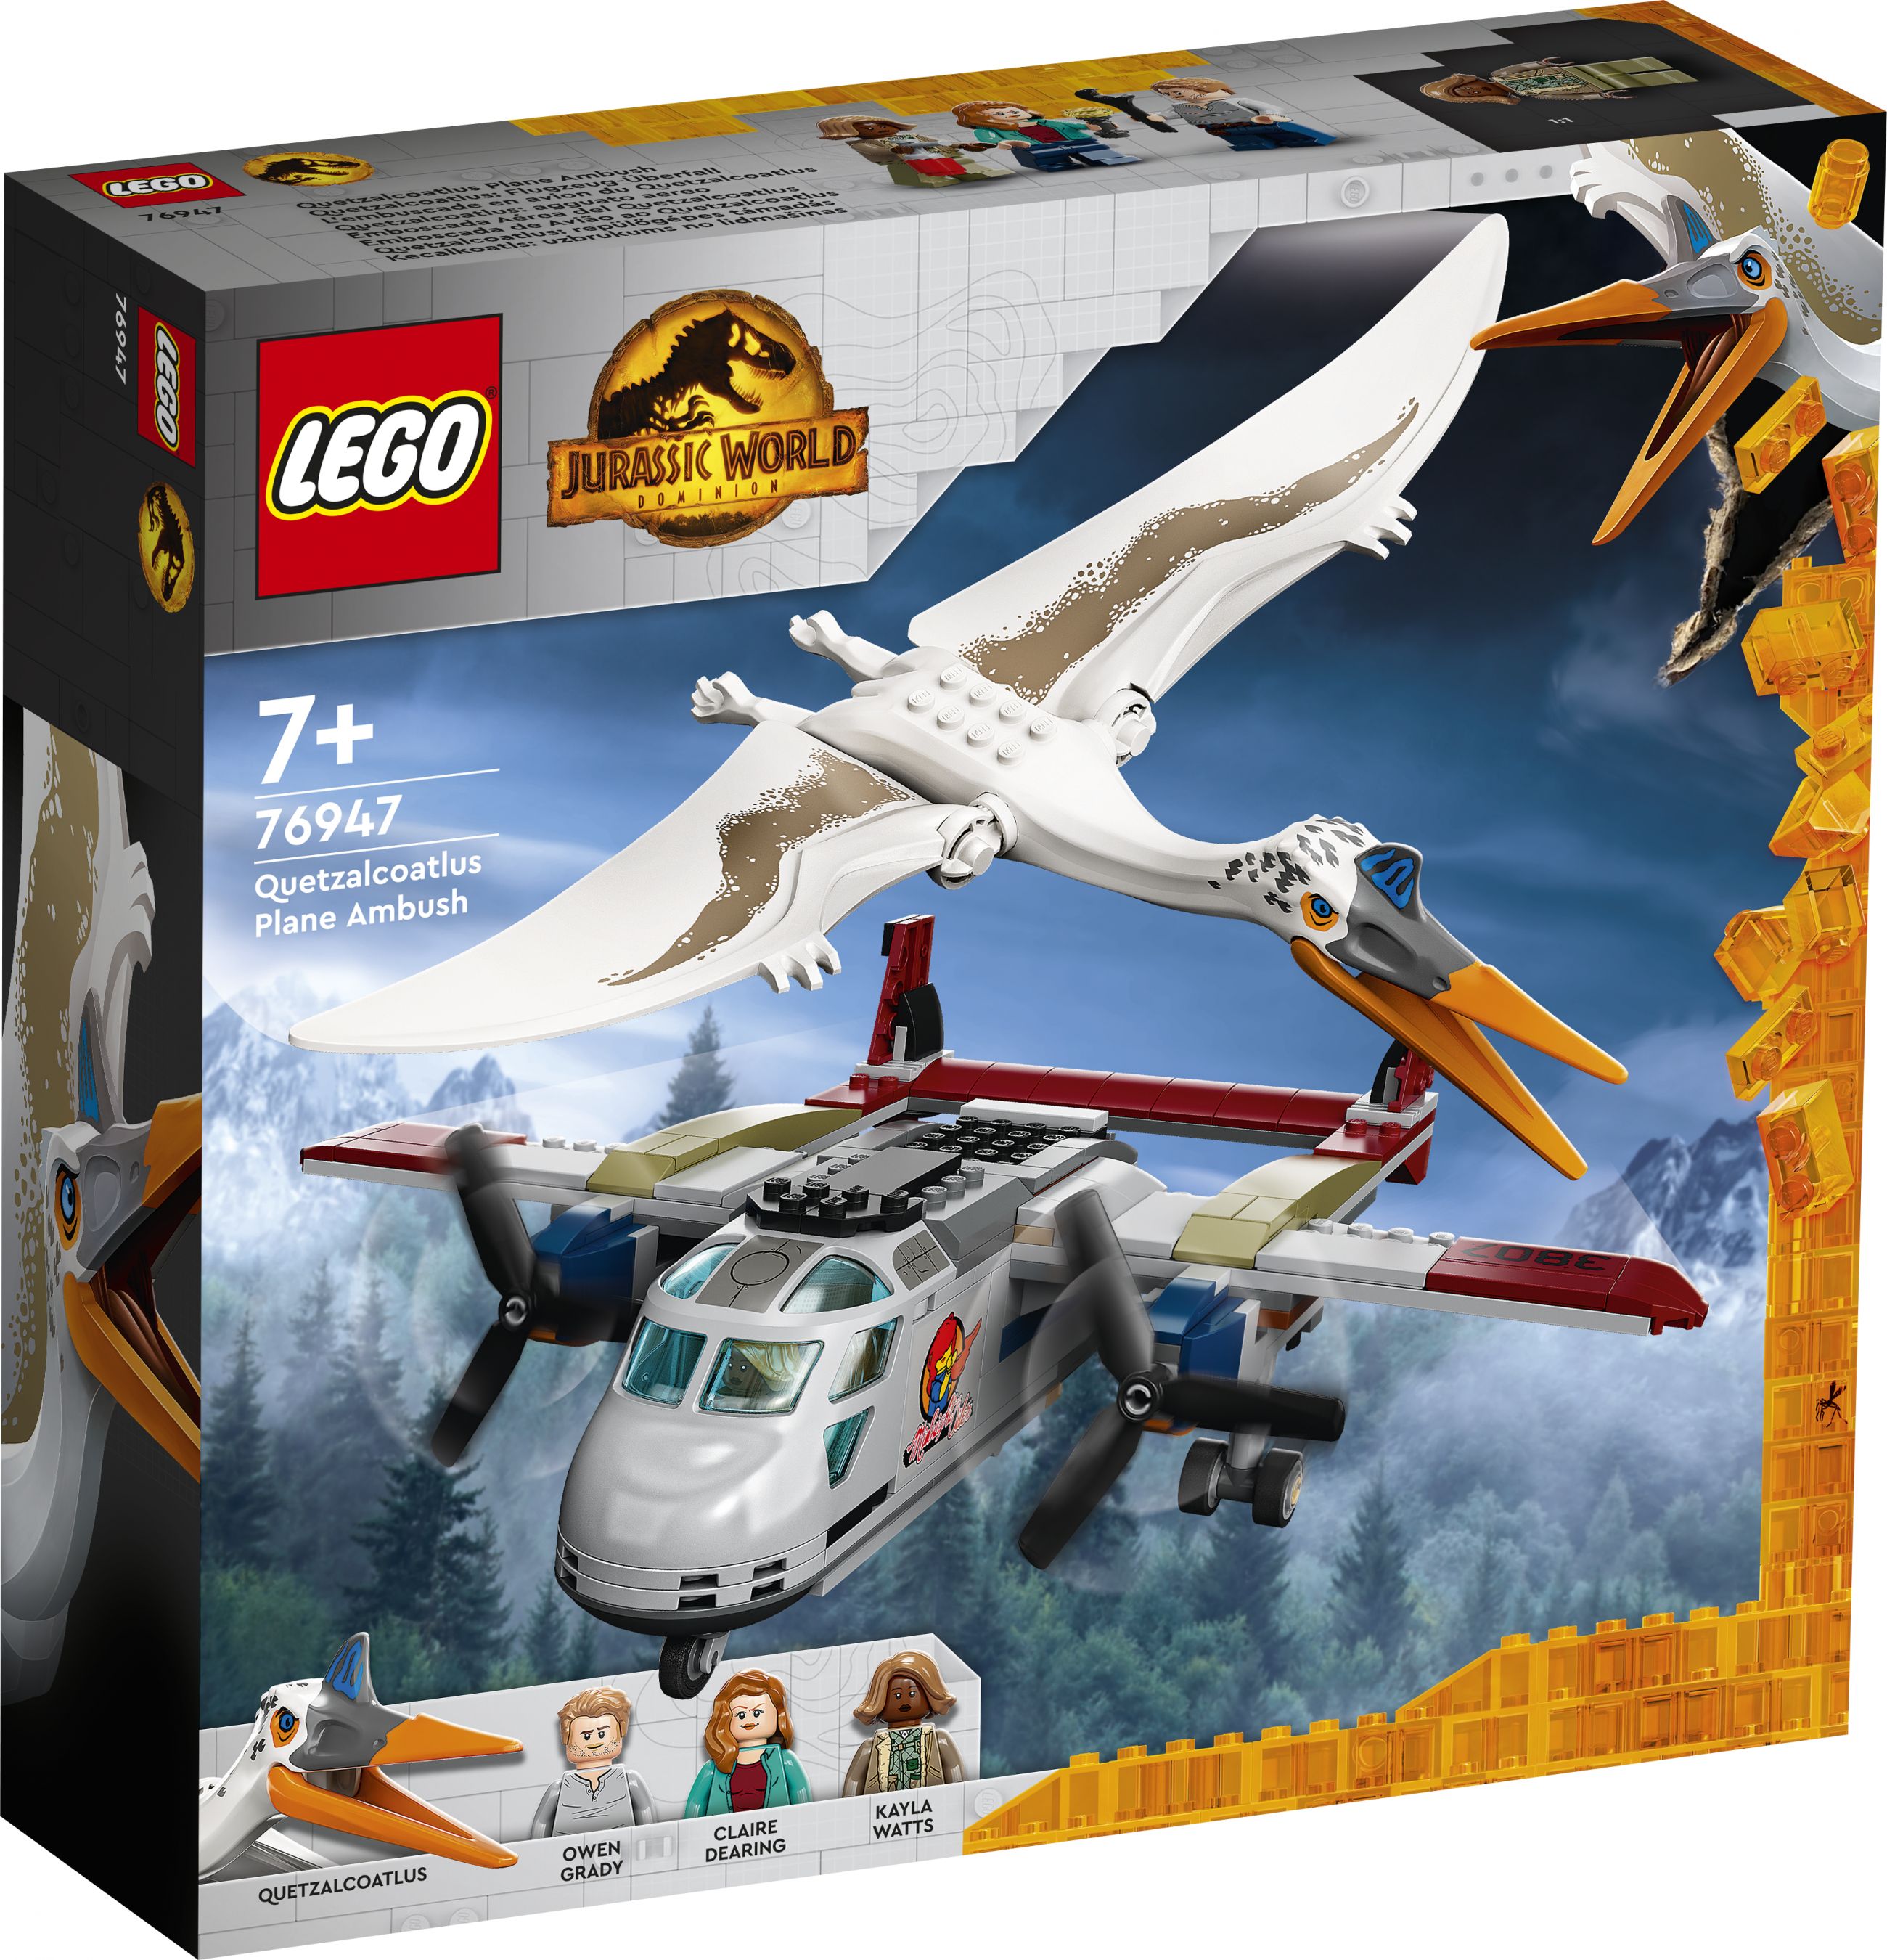 LEGO Jurassic World 76947 Quetzalcoatlus: Flugzeug-Überfall LEGO_76947_Box1_v29.jpg